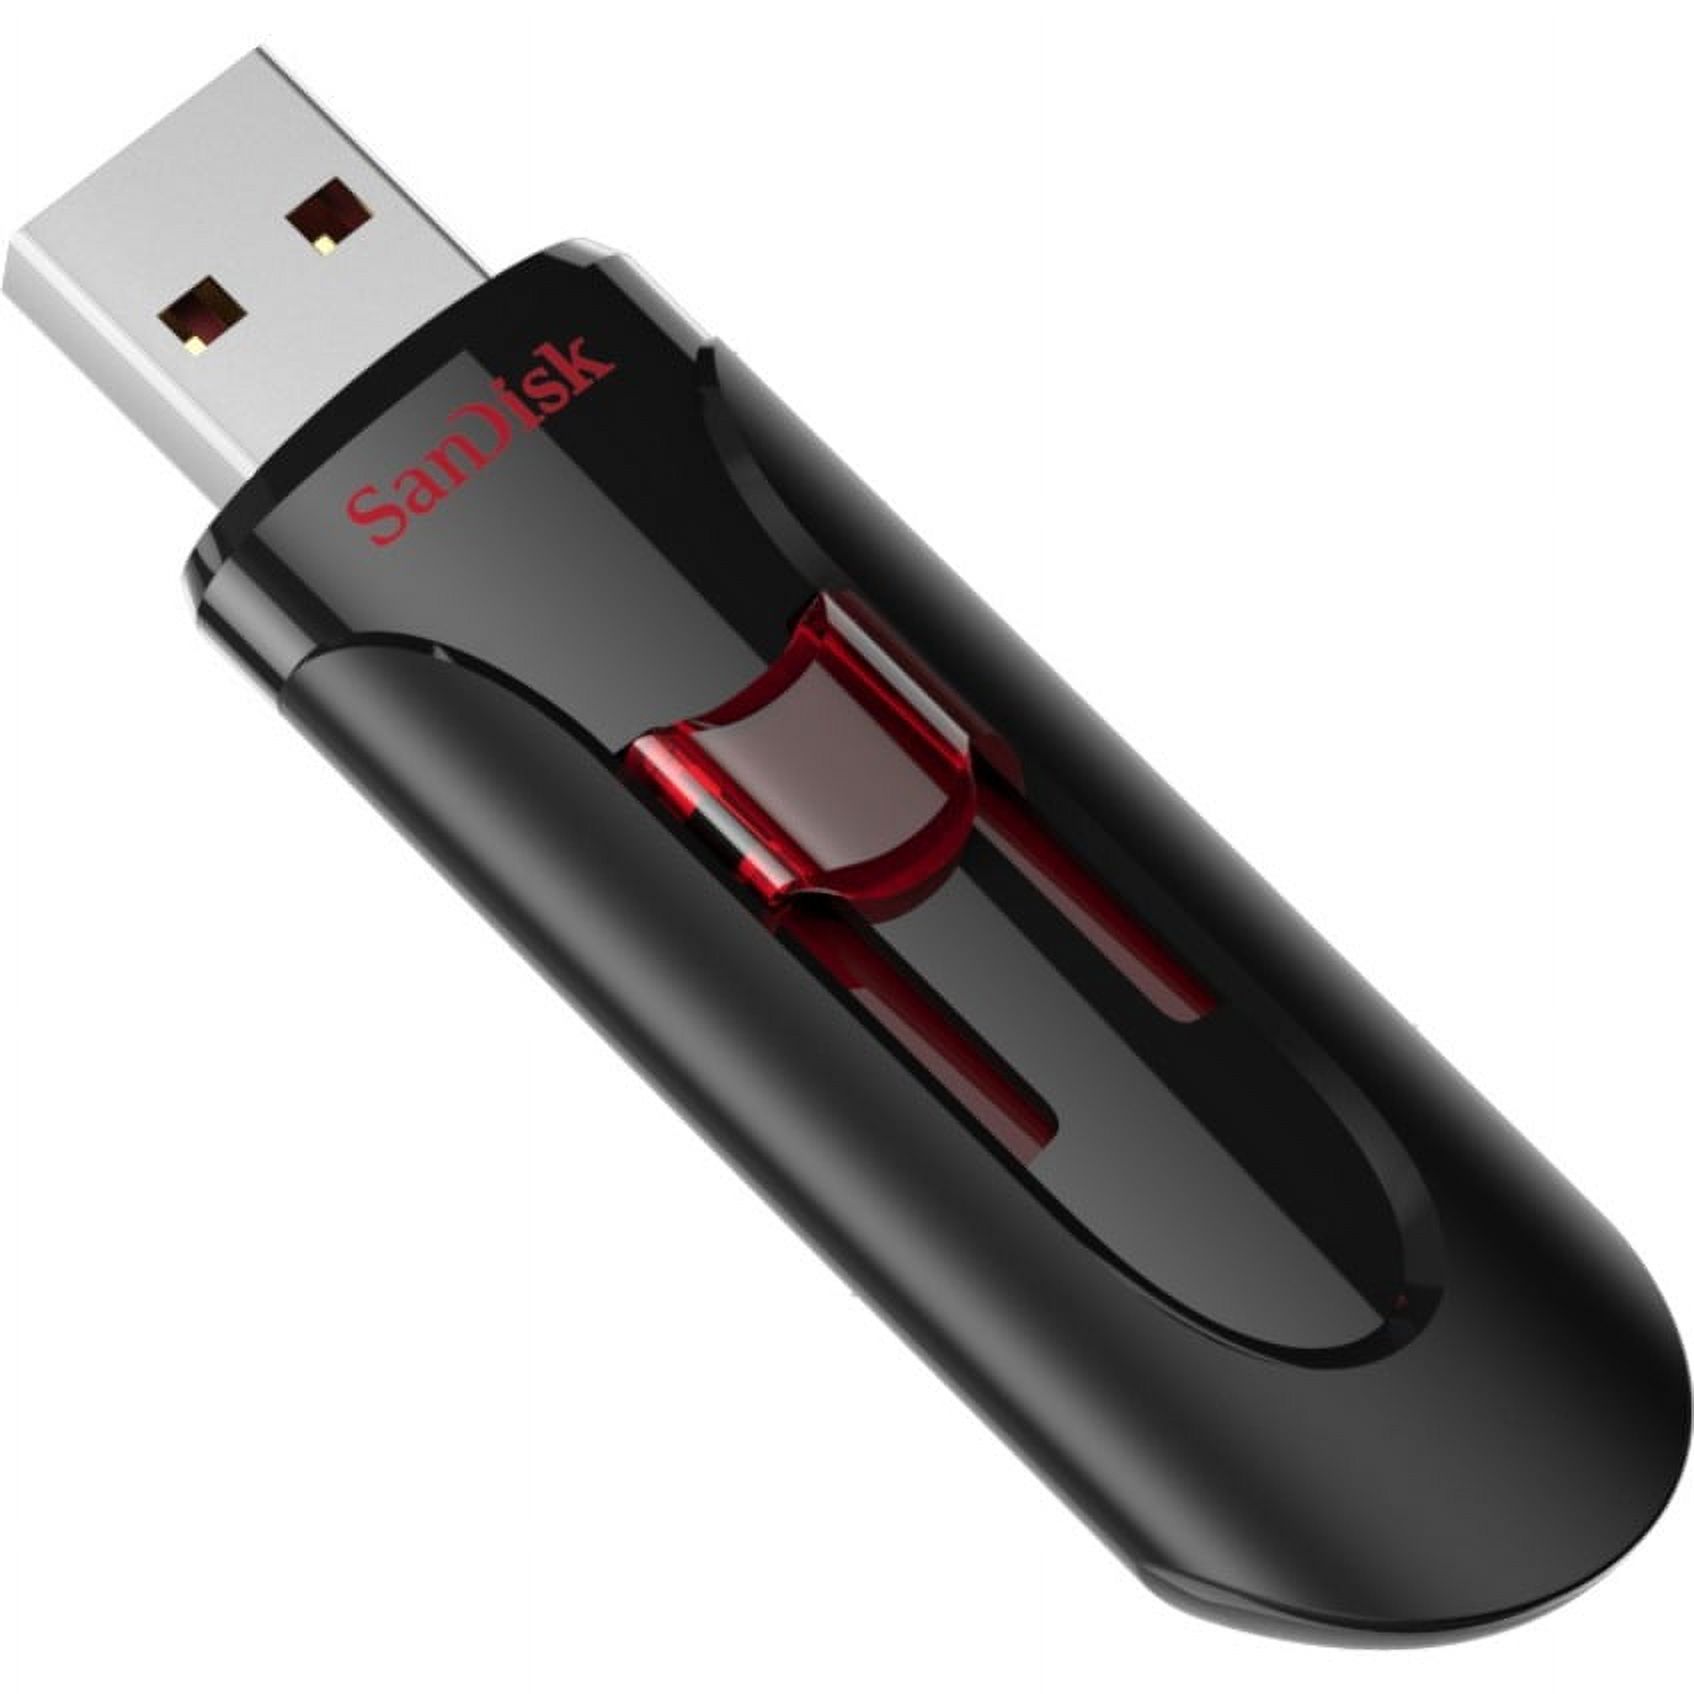 SanDisk Cruzer Glide 3.0 USB Flash Drive, 128GB - image 1 of 7